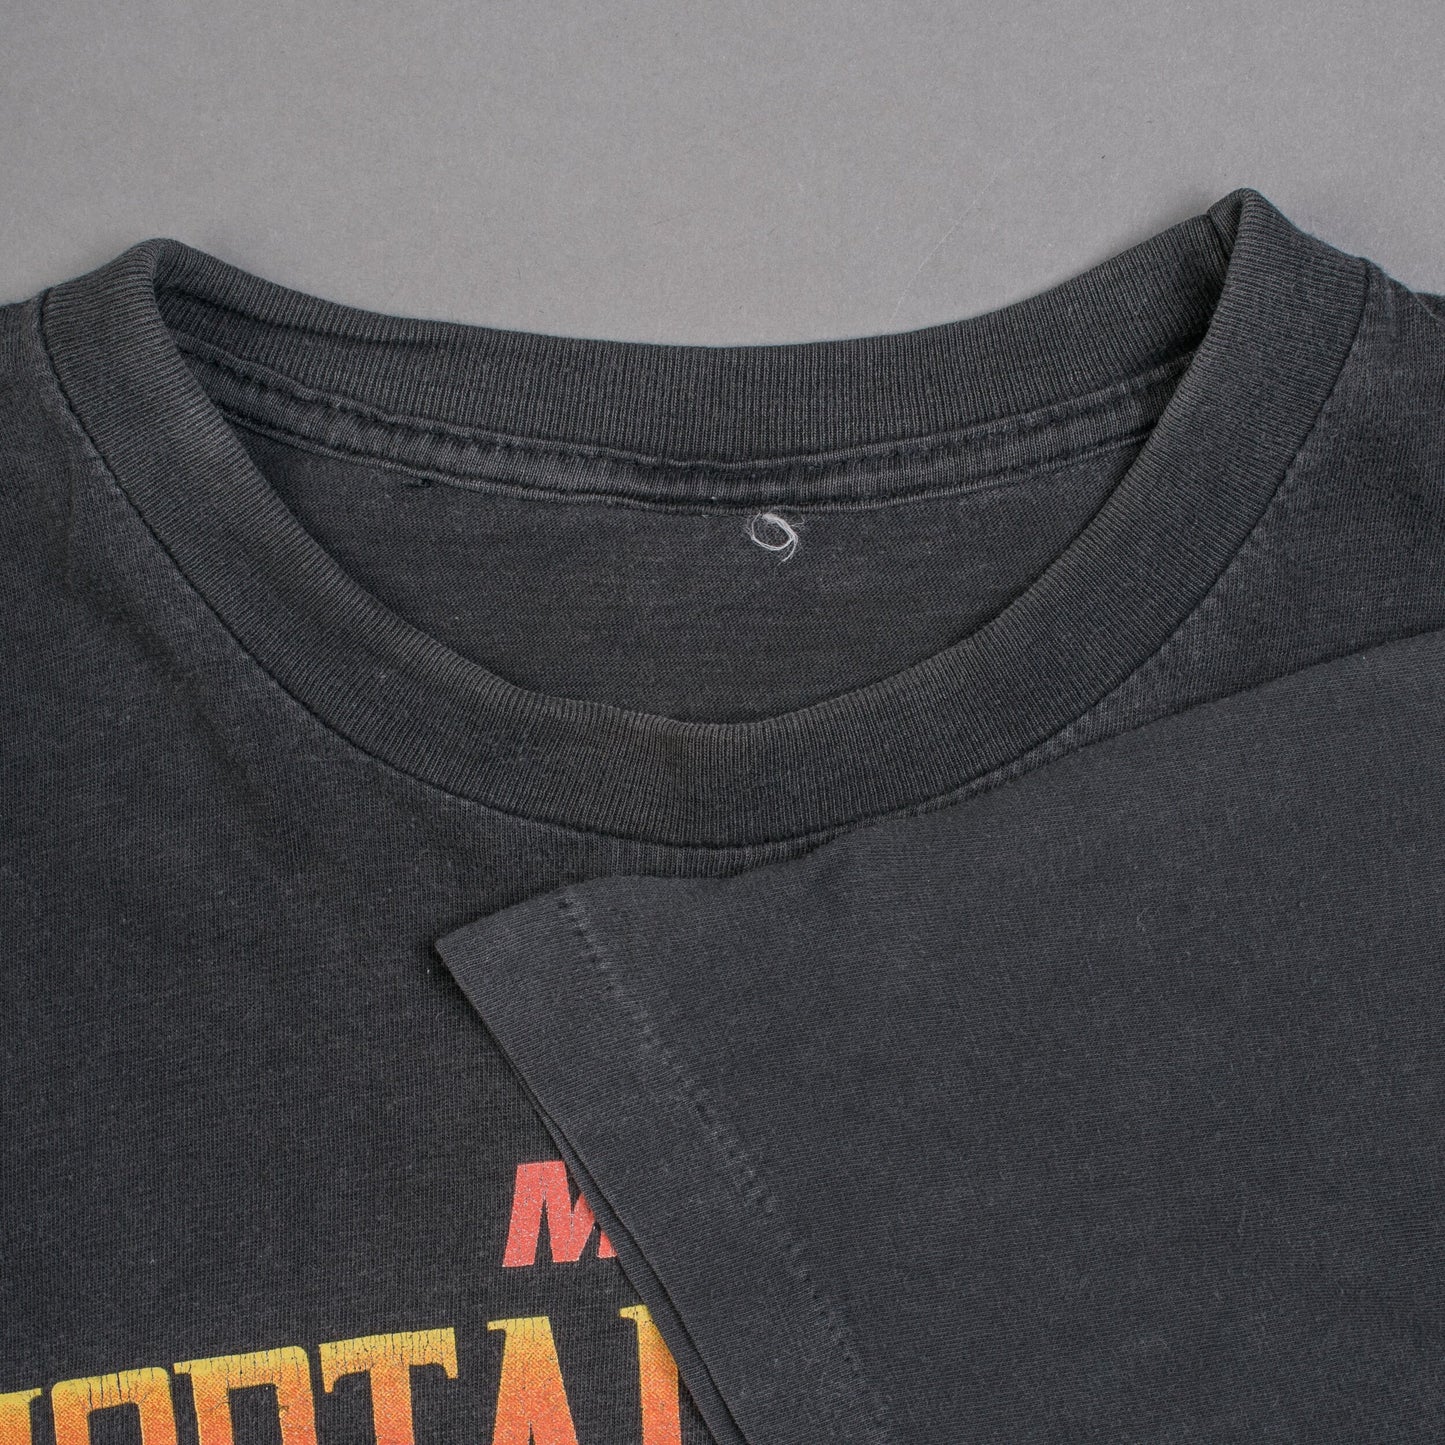 Vintage 1993 Mortal Kombat Video Game Release Promo T-Shirt